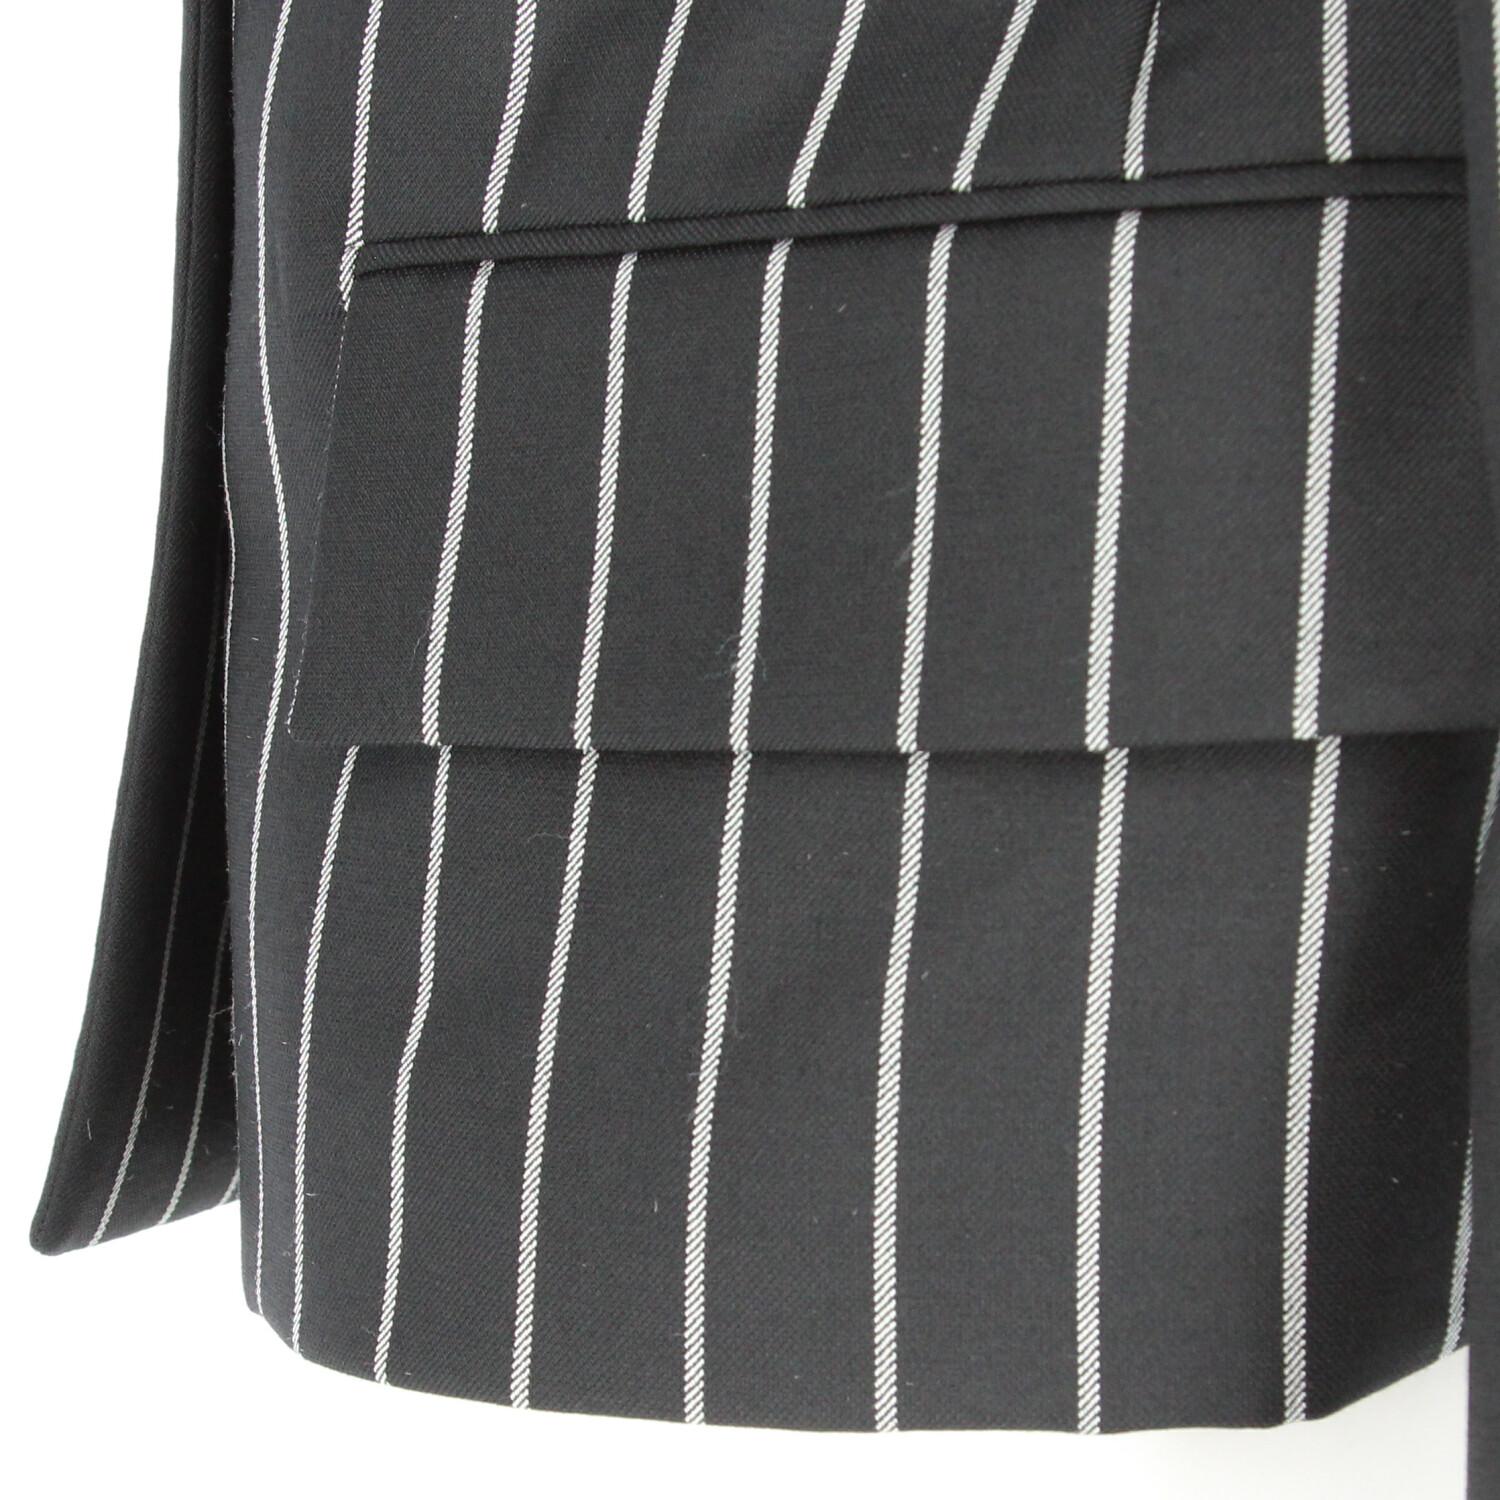 2010s Jil Sander Pinstripe Blazer For Sale 1